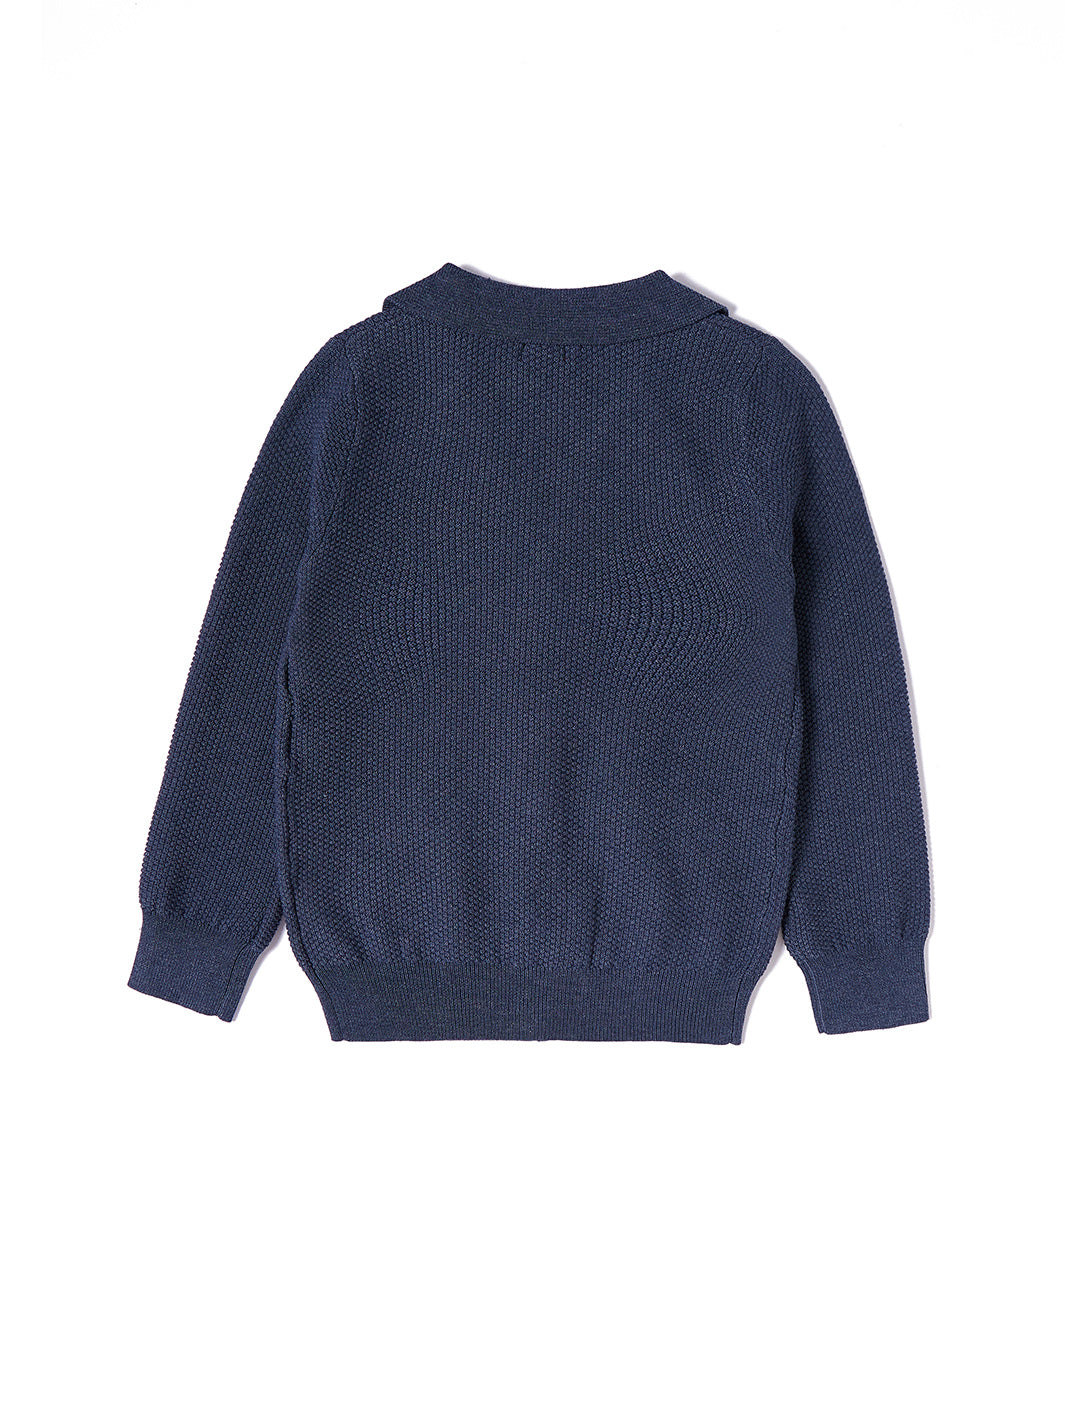 Blazer Bomber Style Sweater - Blue Grey Mix